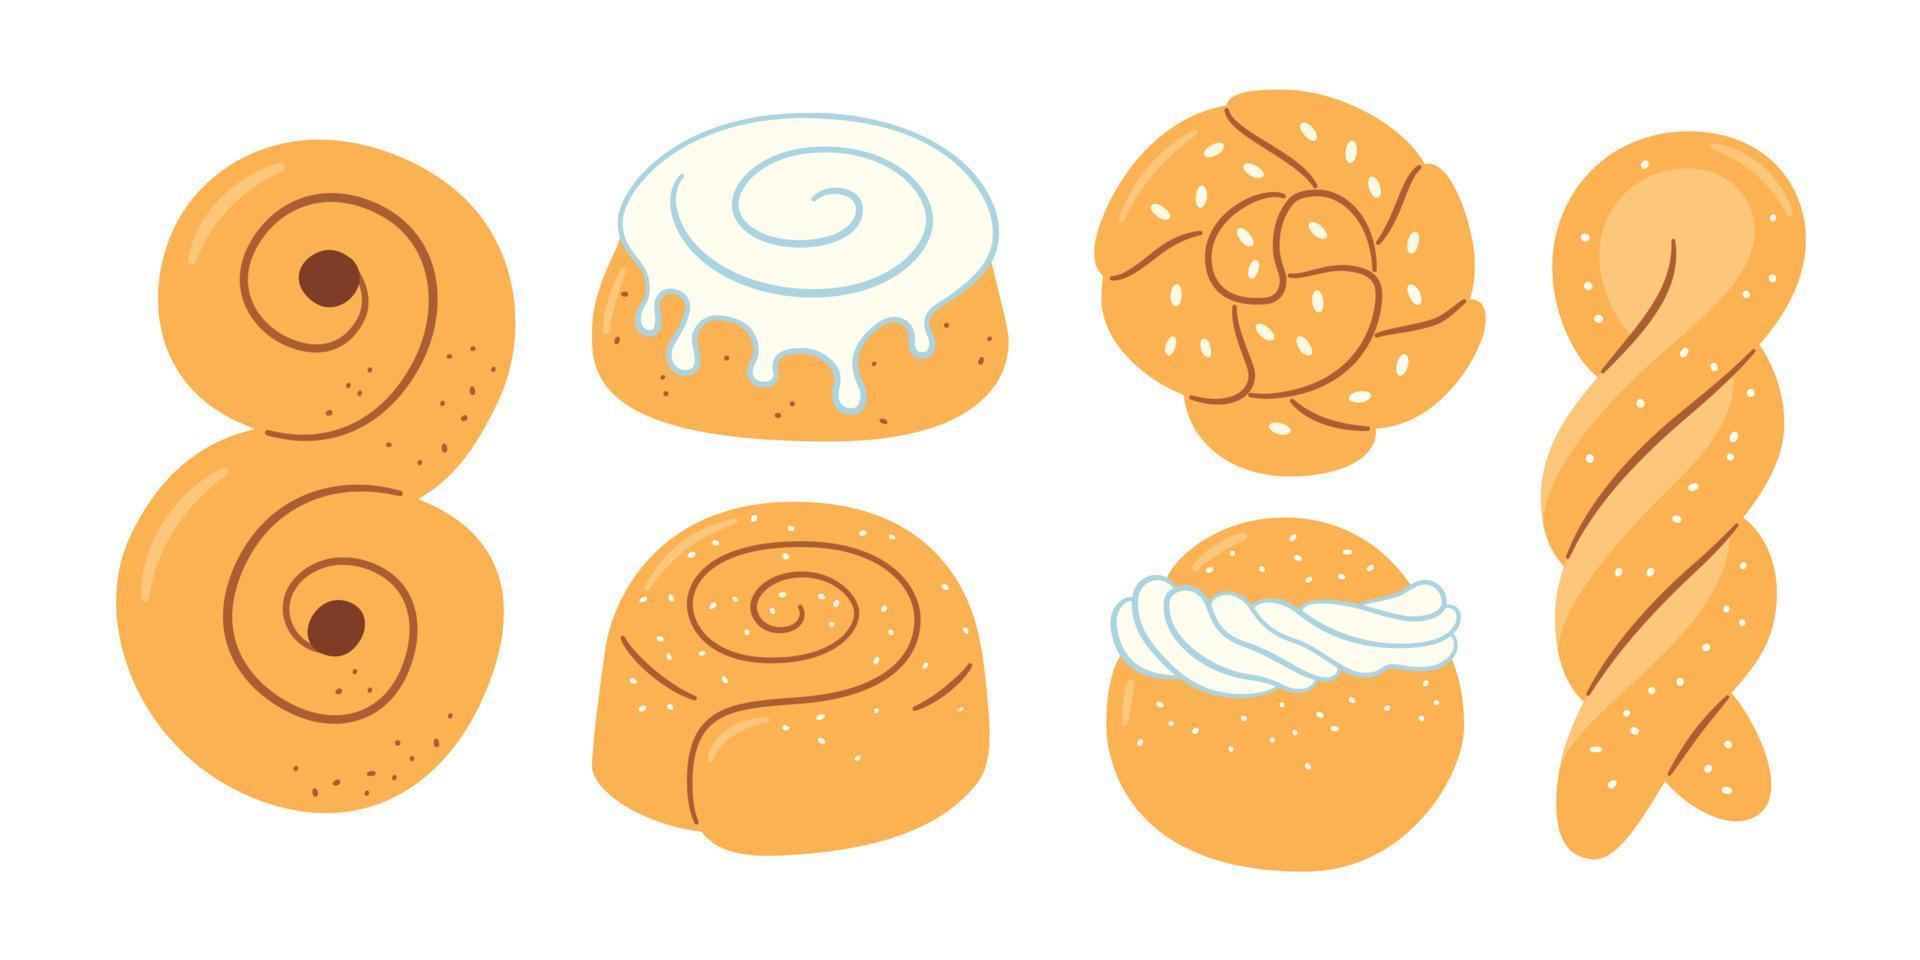 Cinnamon rolls with sugar. Set of swirl buns. Hand drawn isolated vector illustration